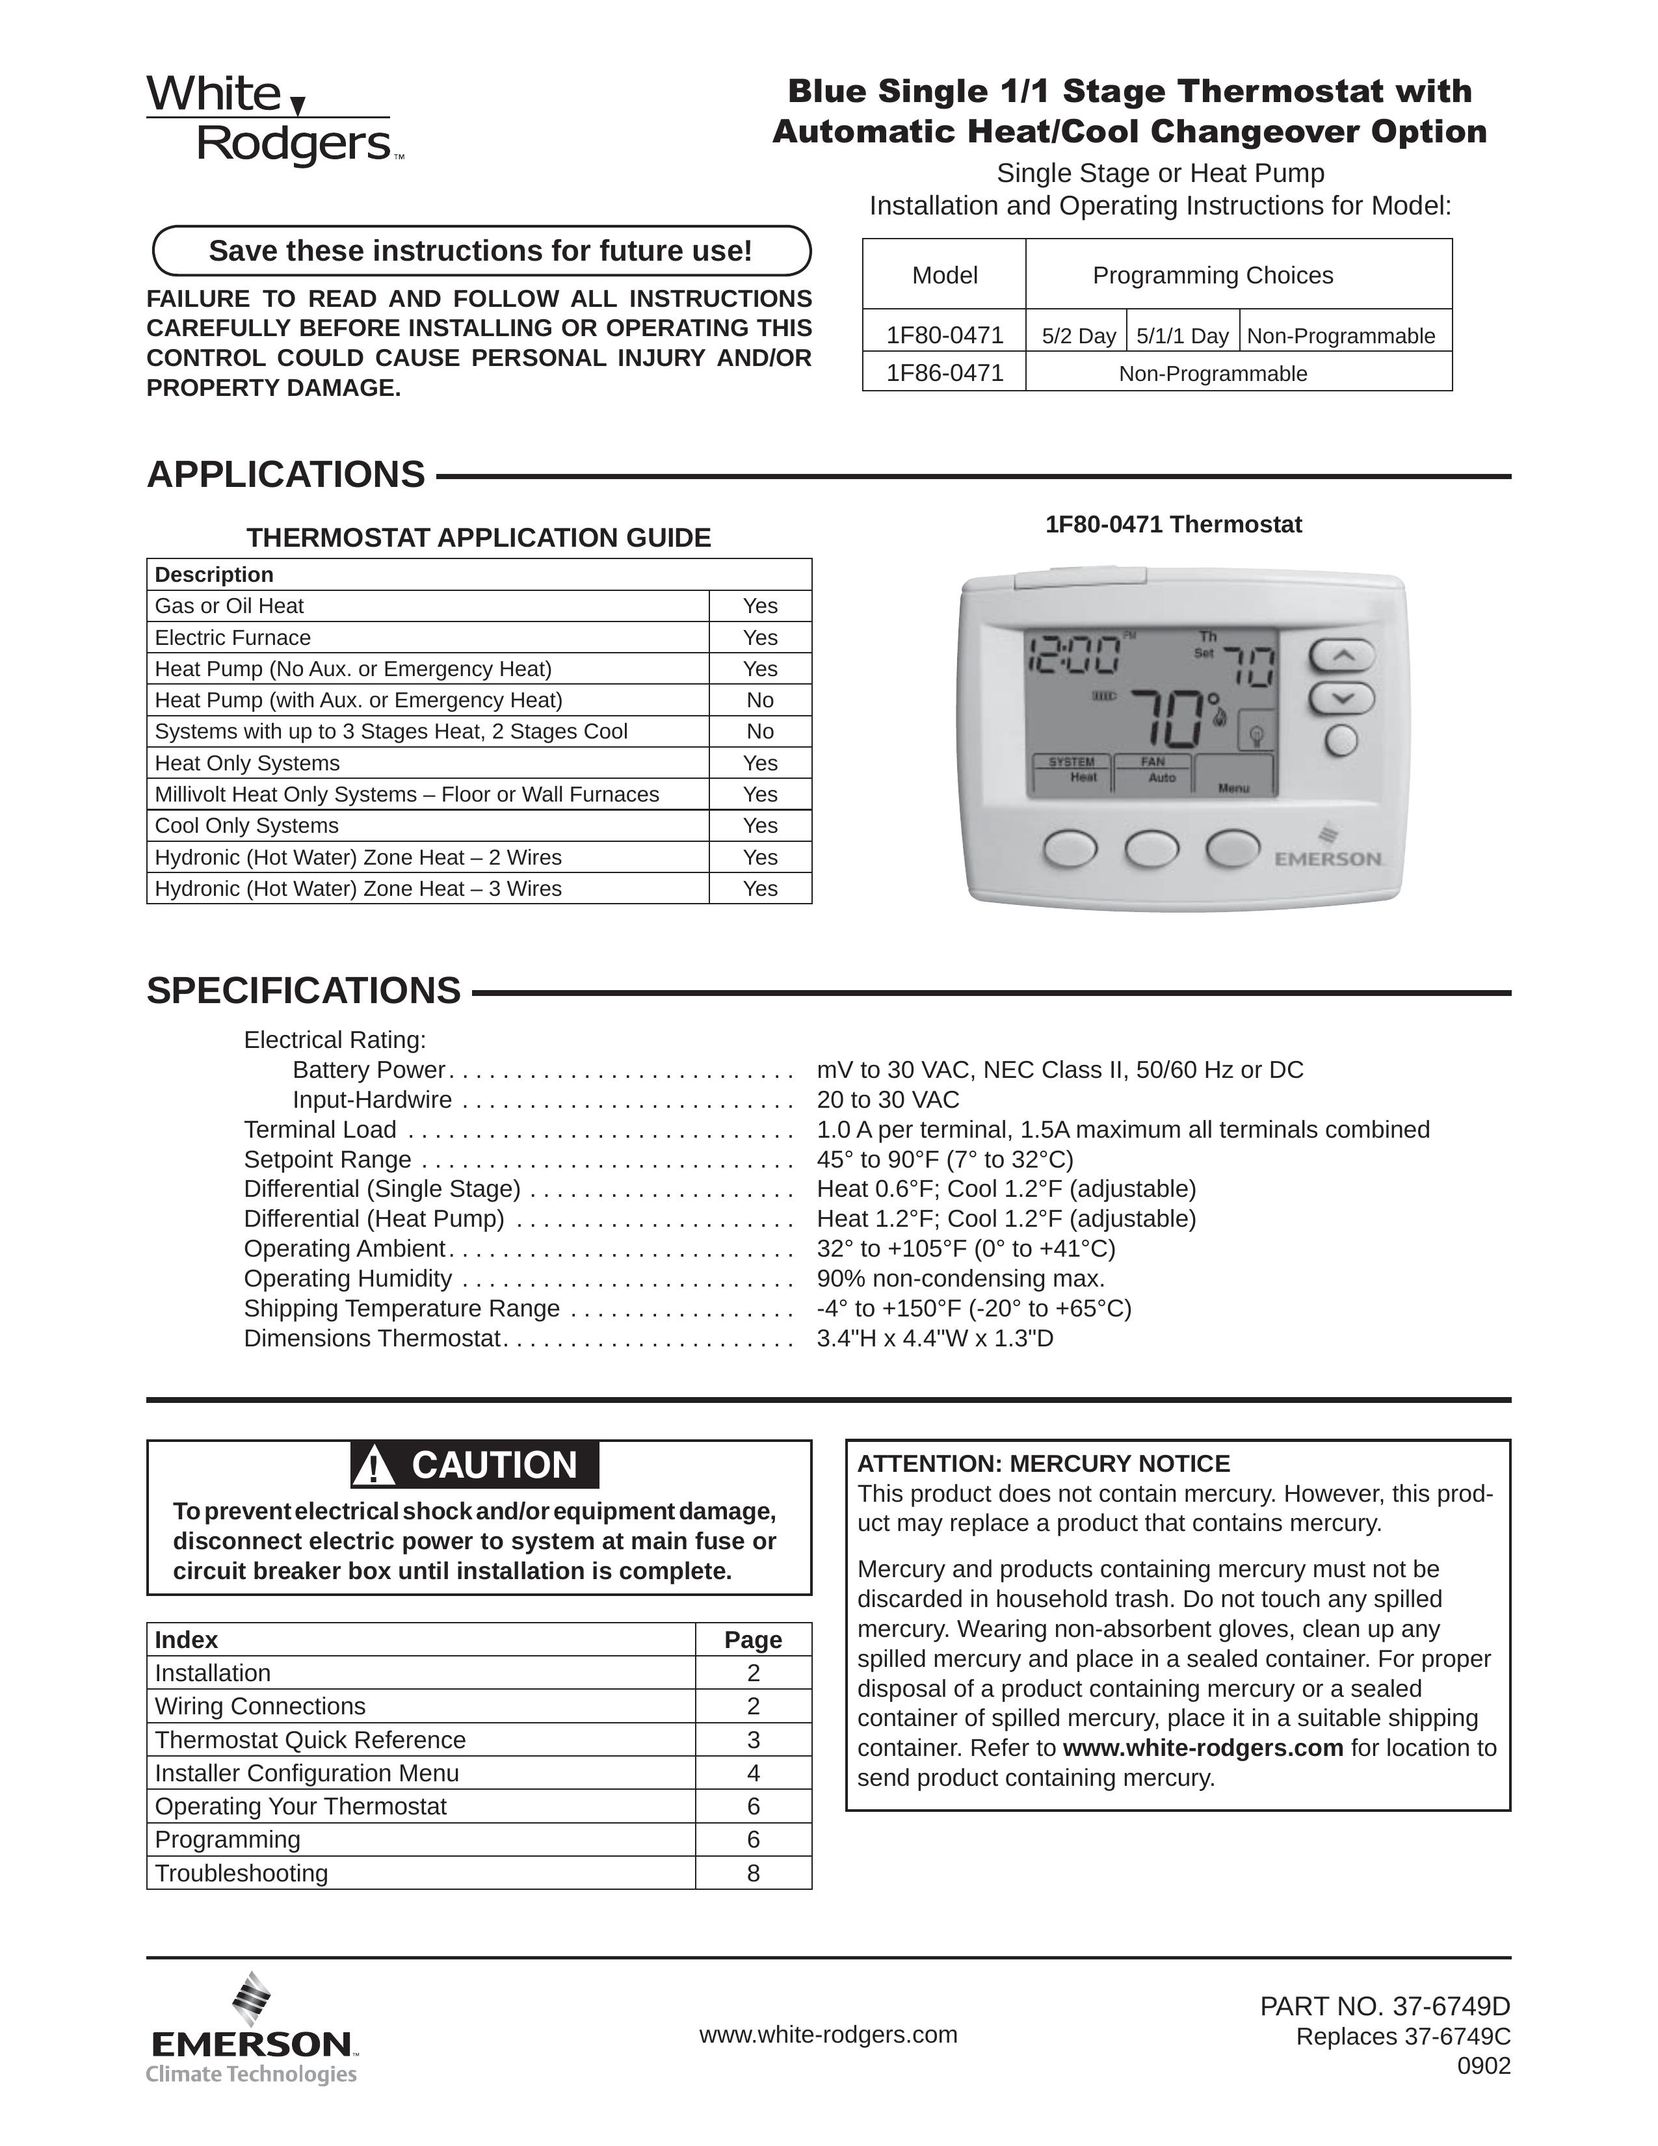 Emerson 1F80-0471 Thermostat User Manual